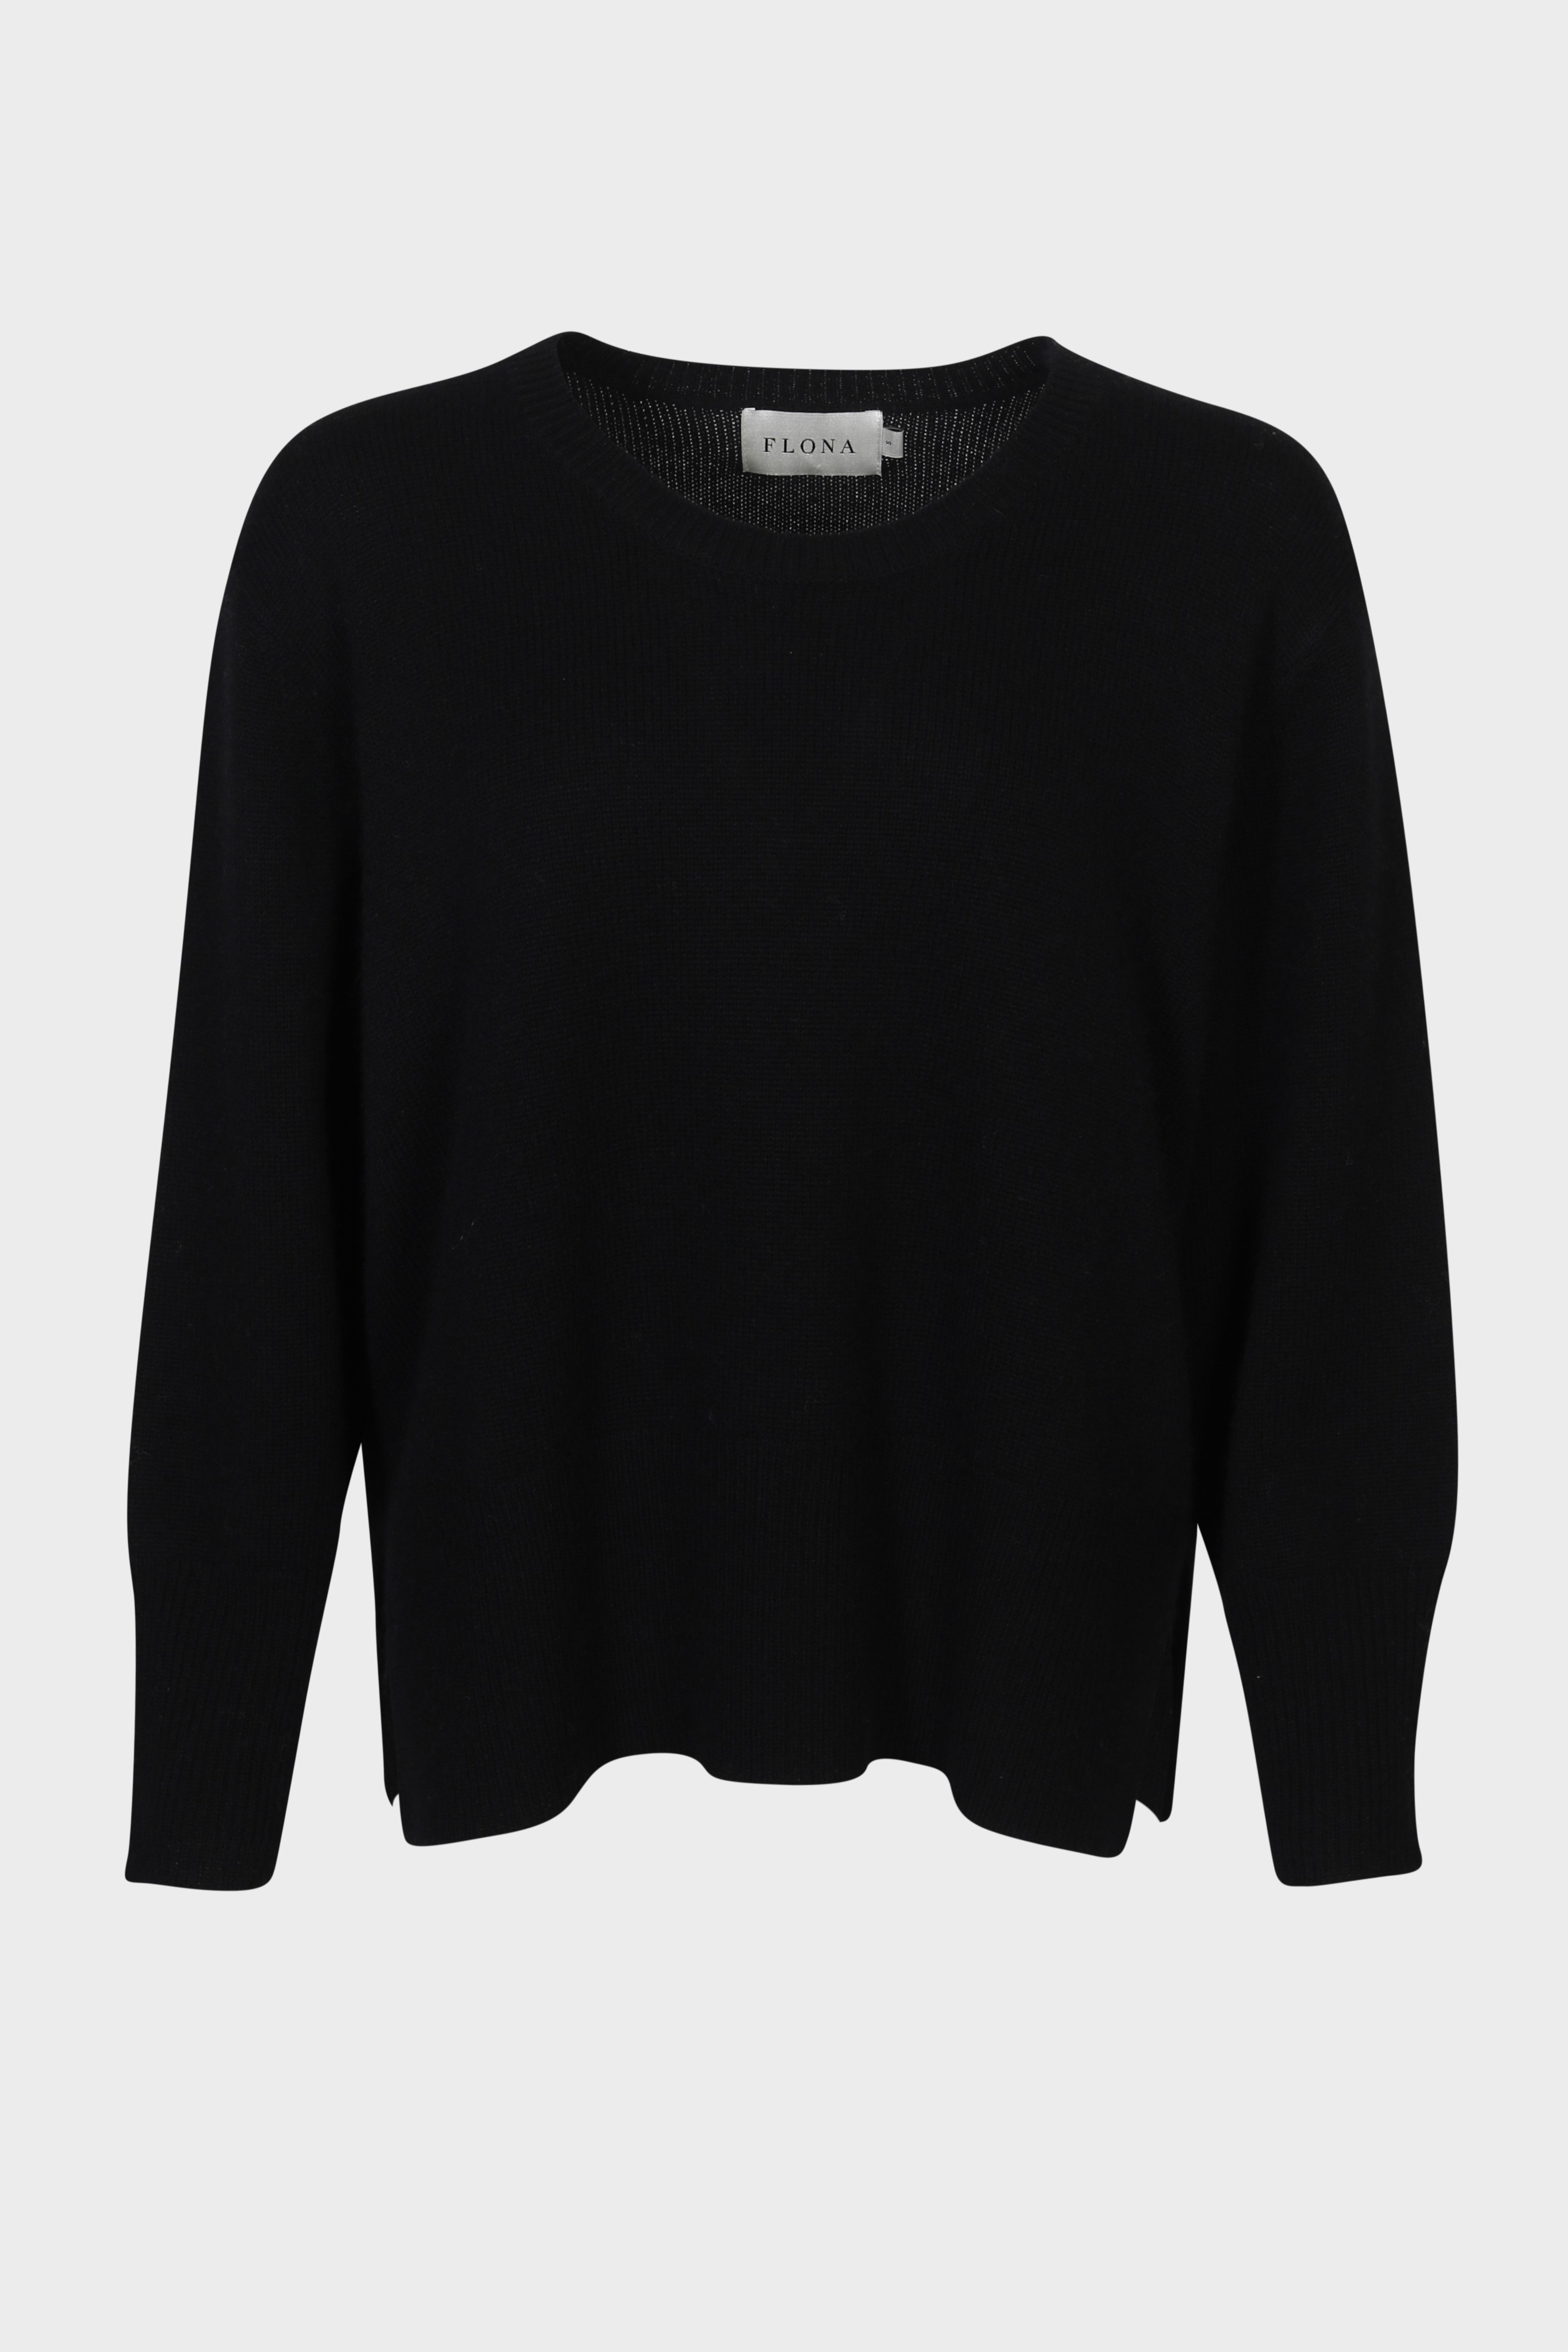 FLONA Cashmere Sweater in Black